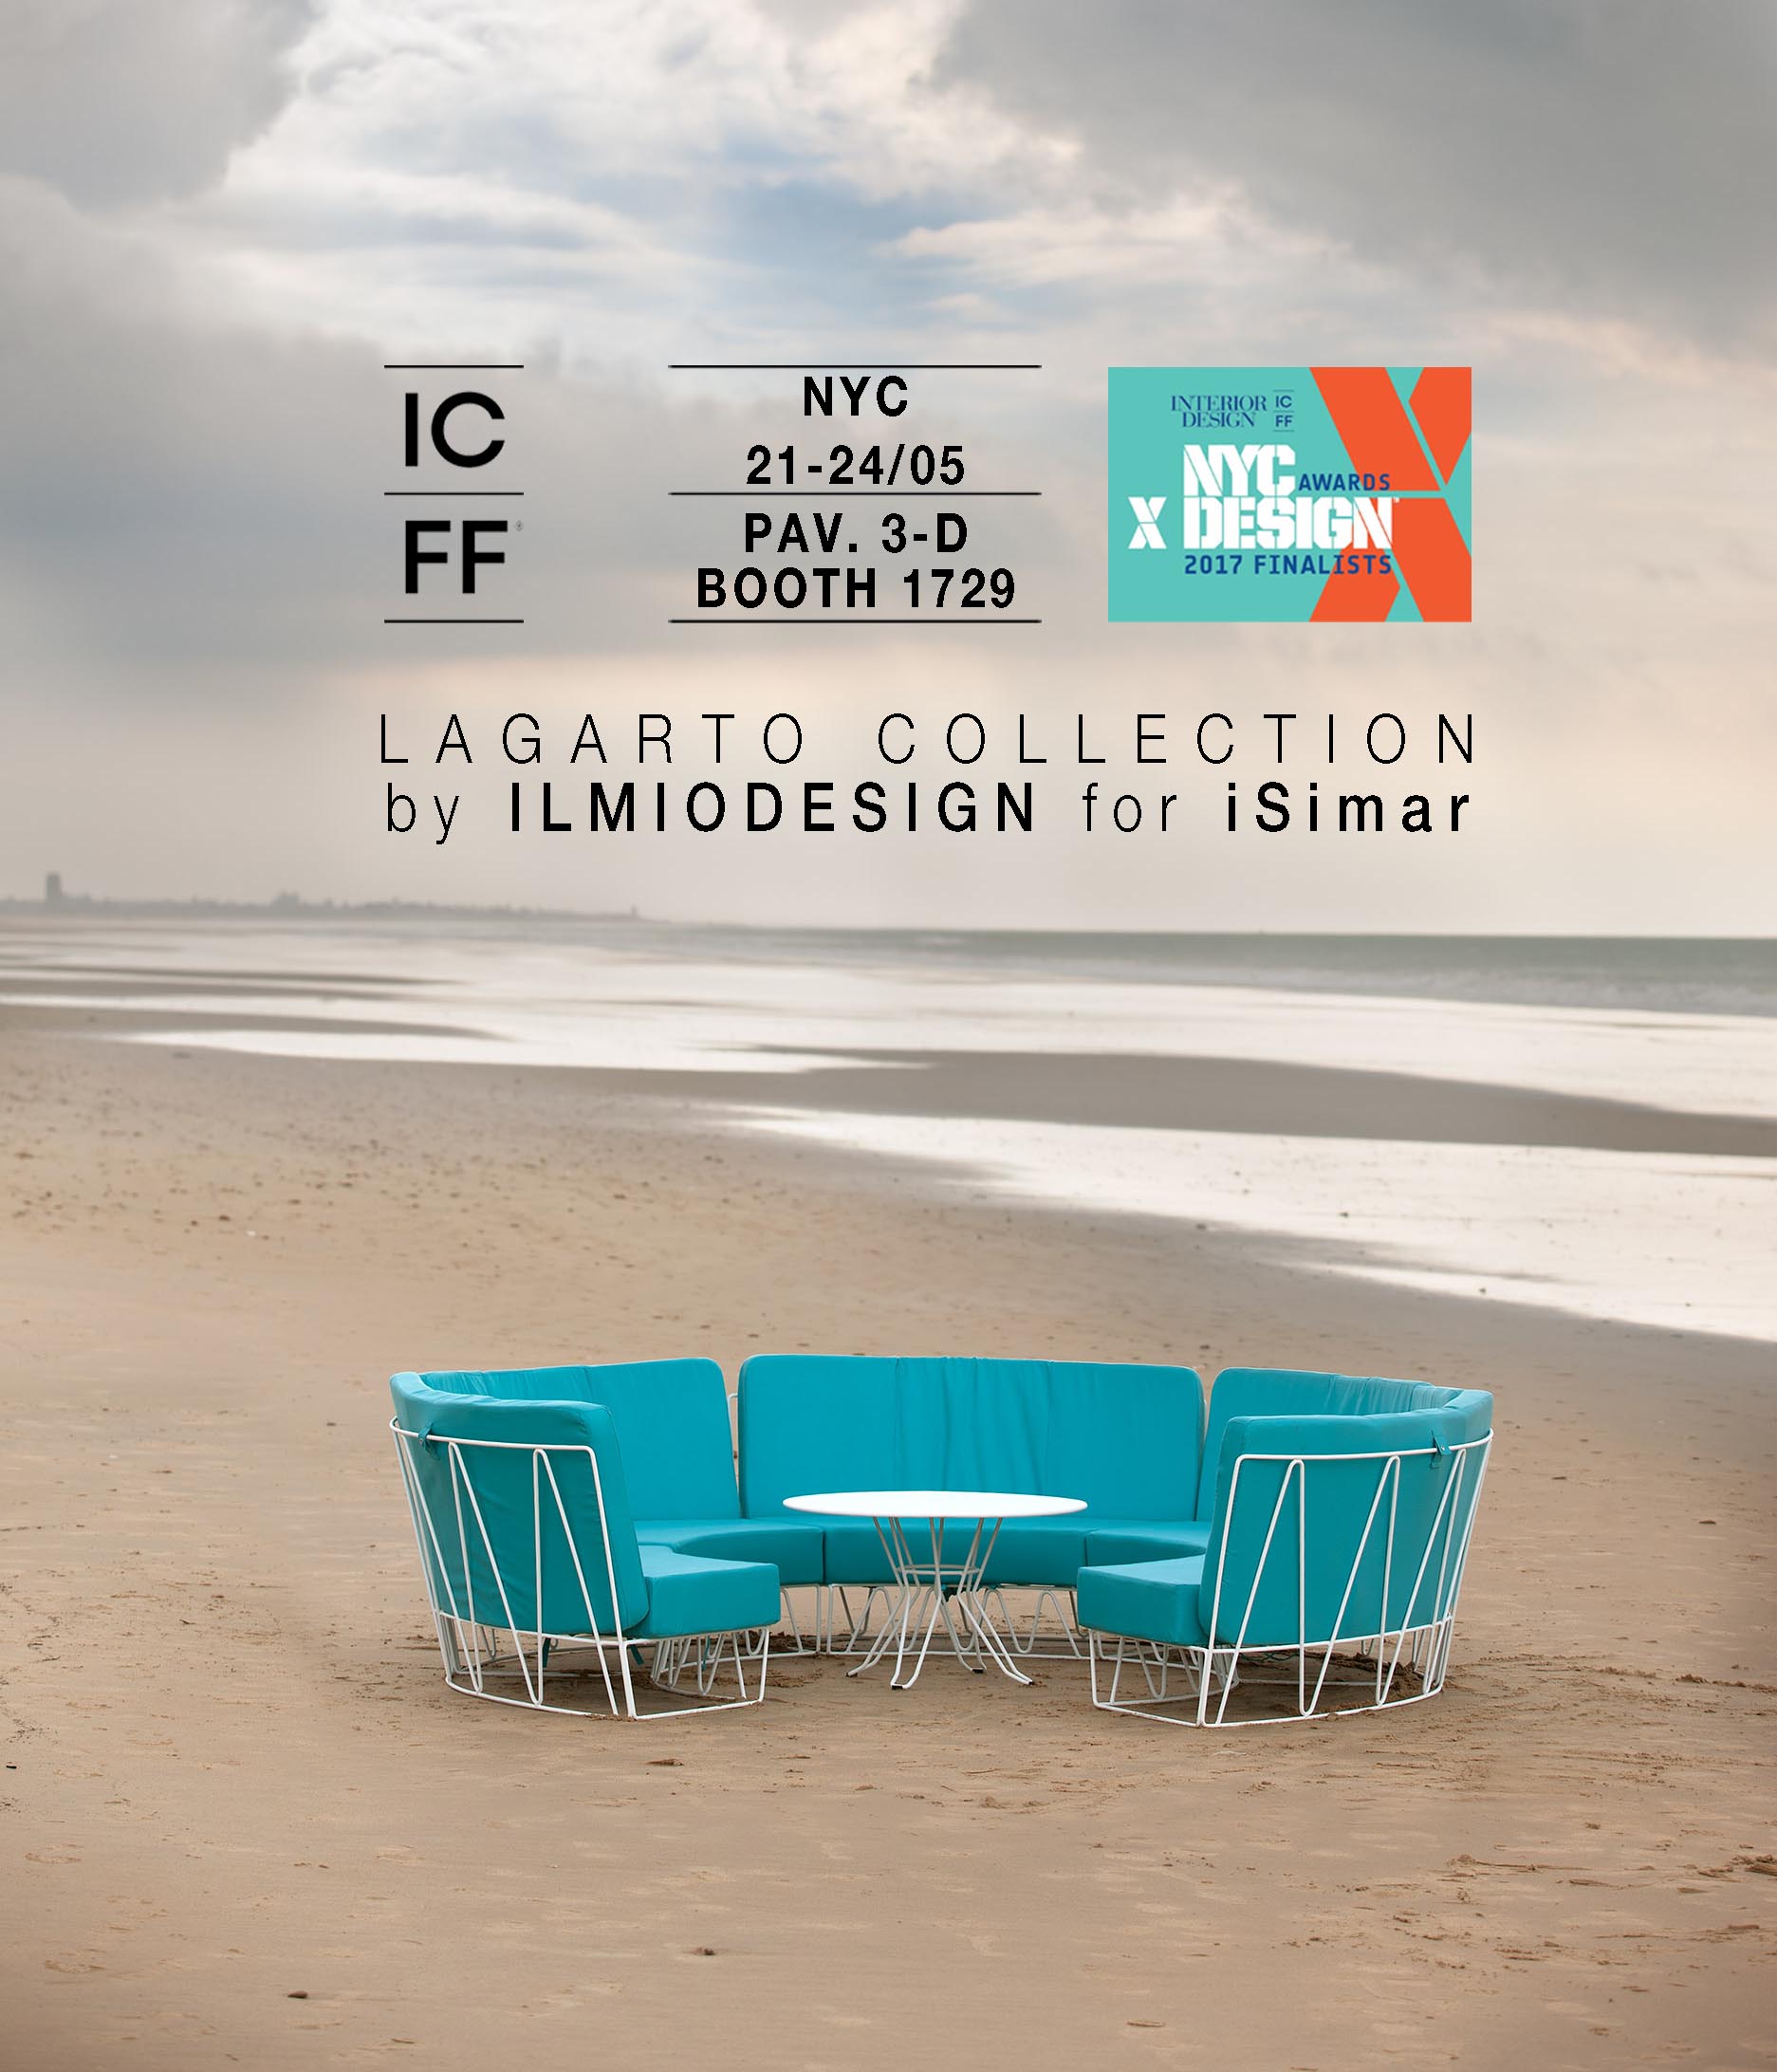 NYC x DESIGN awards FINALISTS – LAGARTO collection